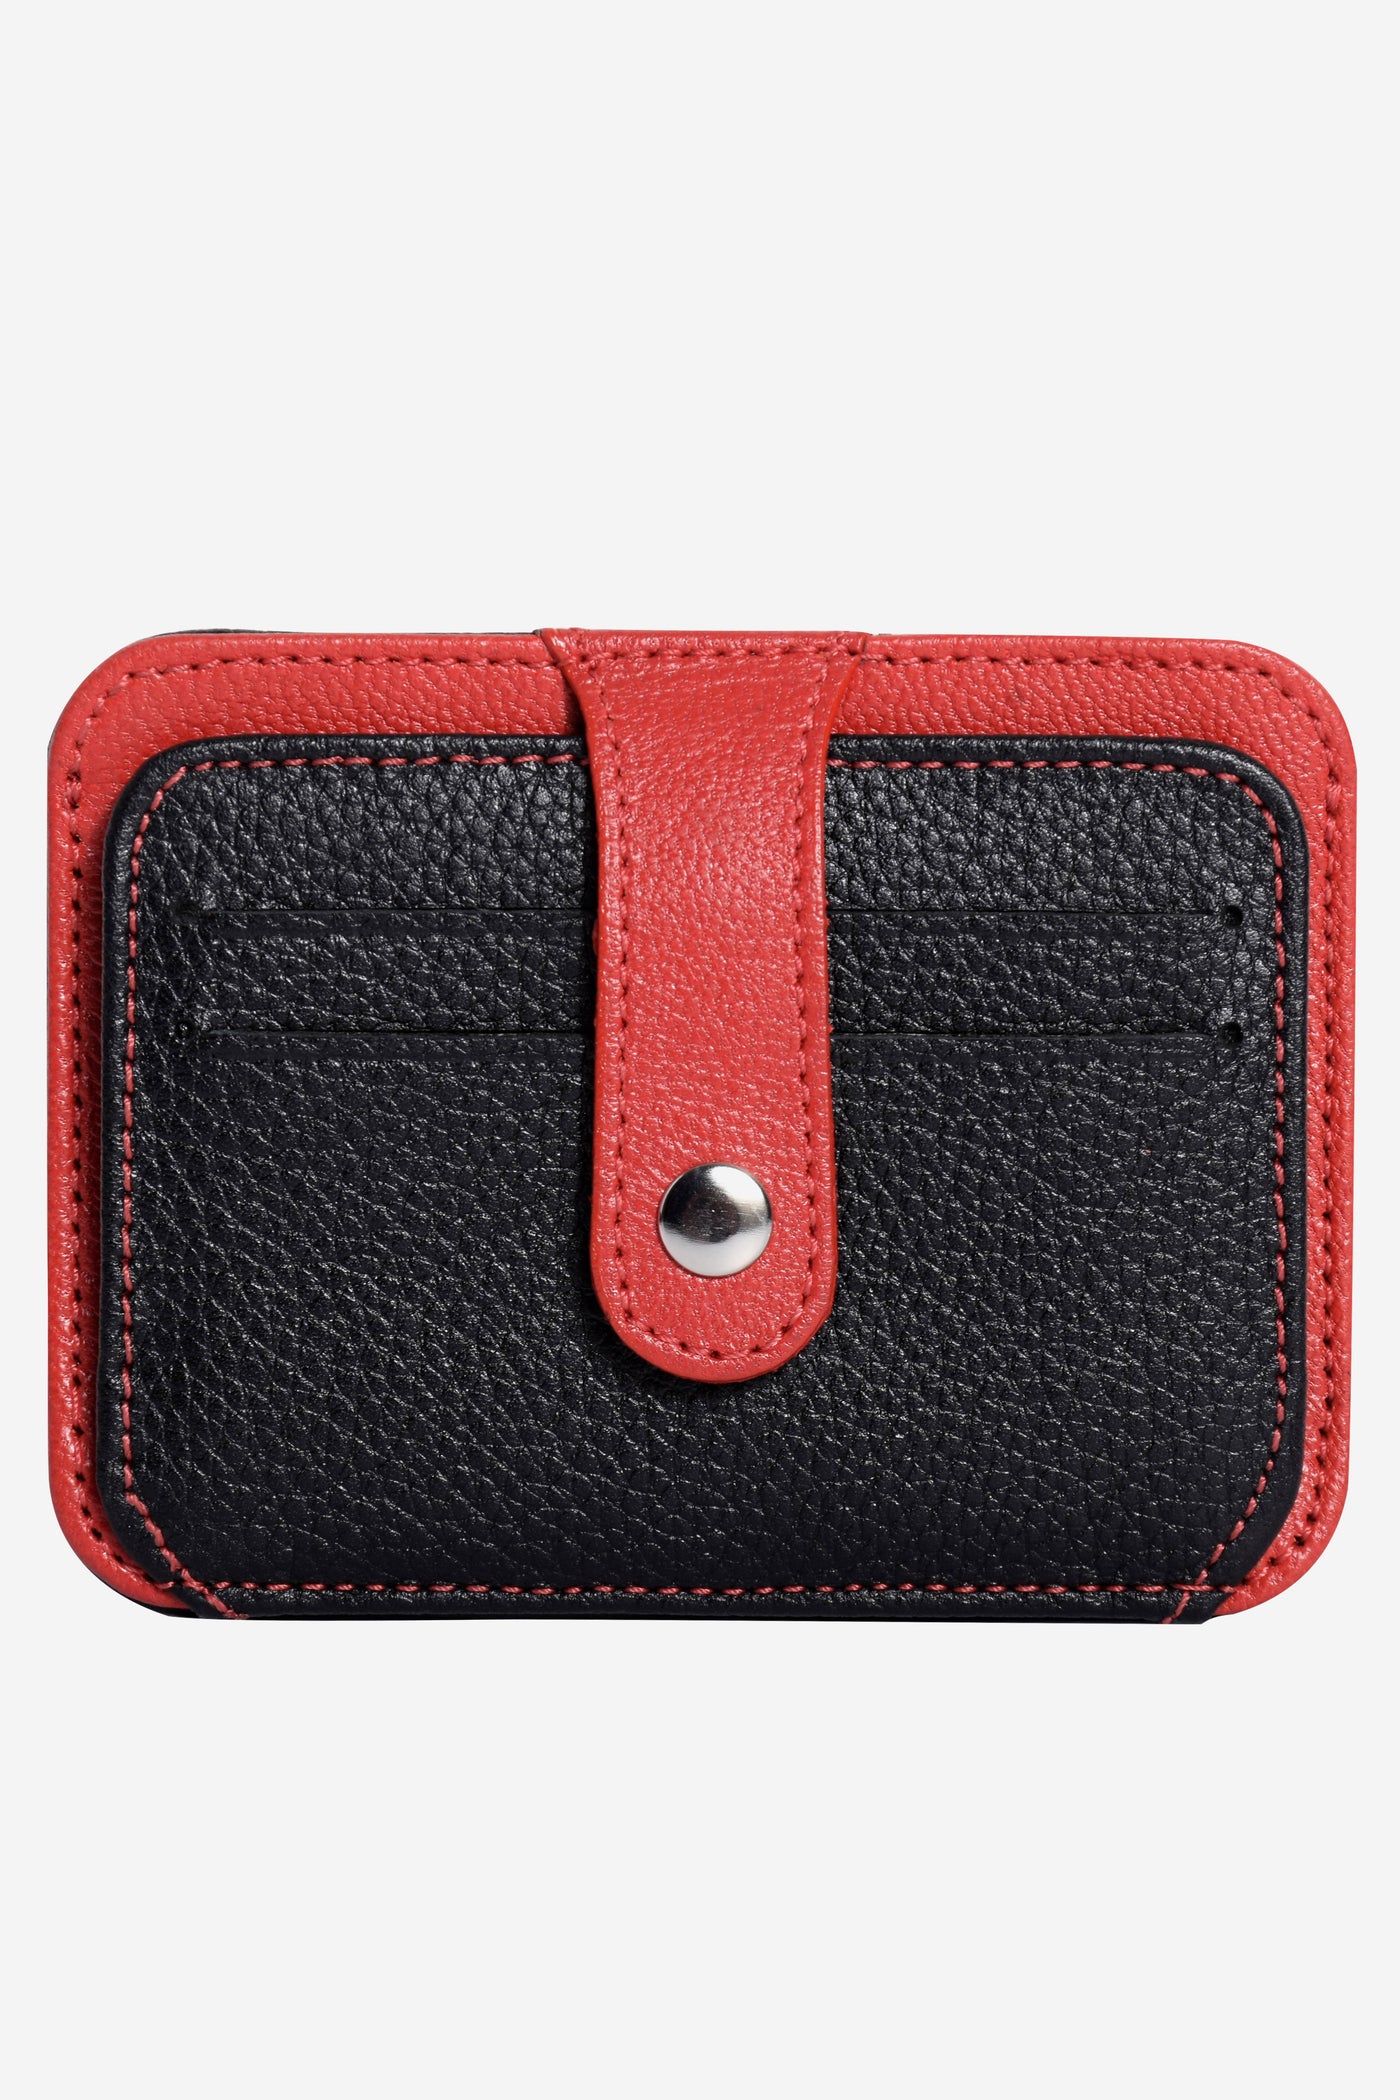 Red Black Genuine Leather Card Holder